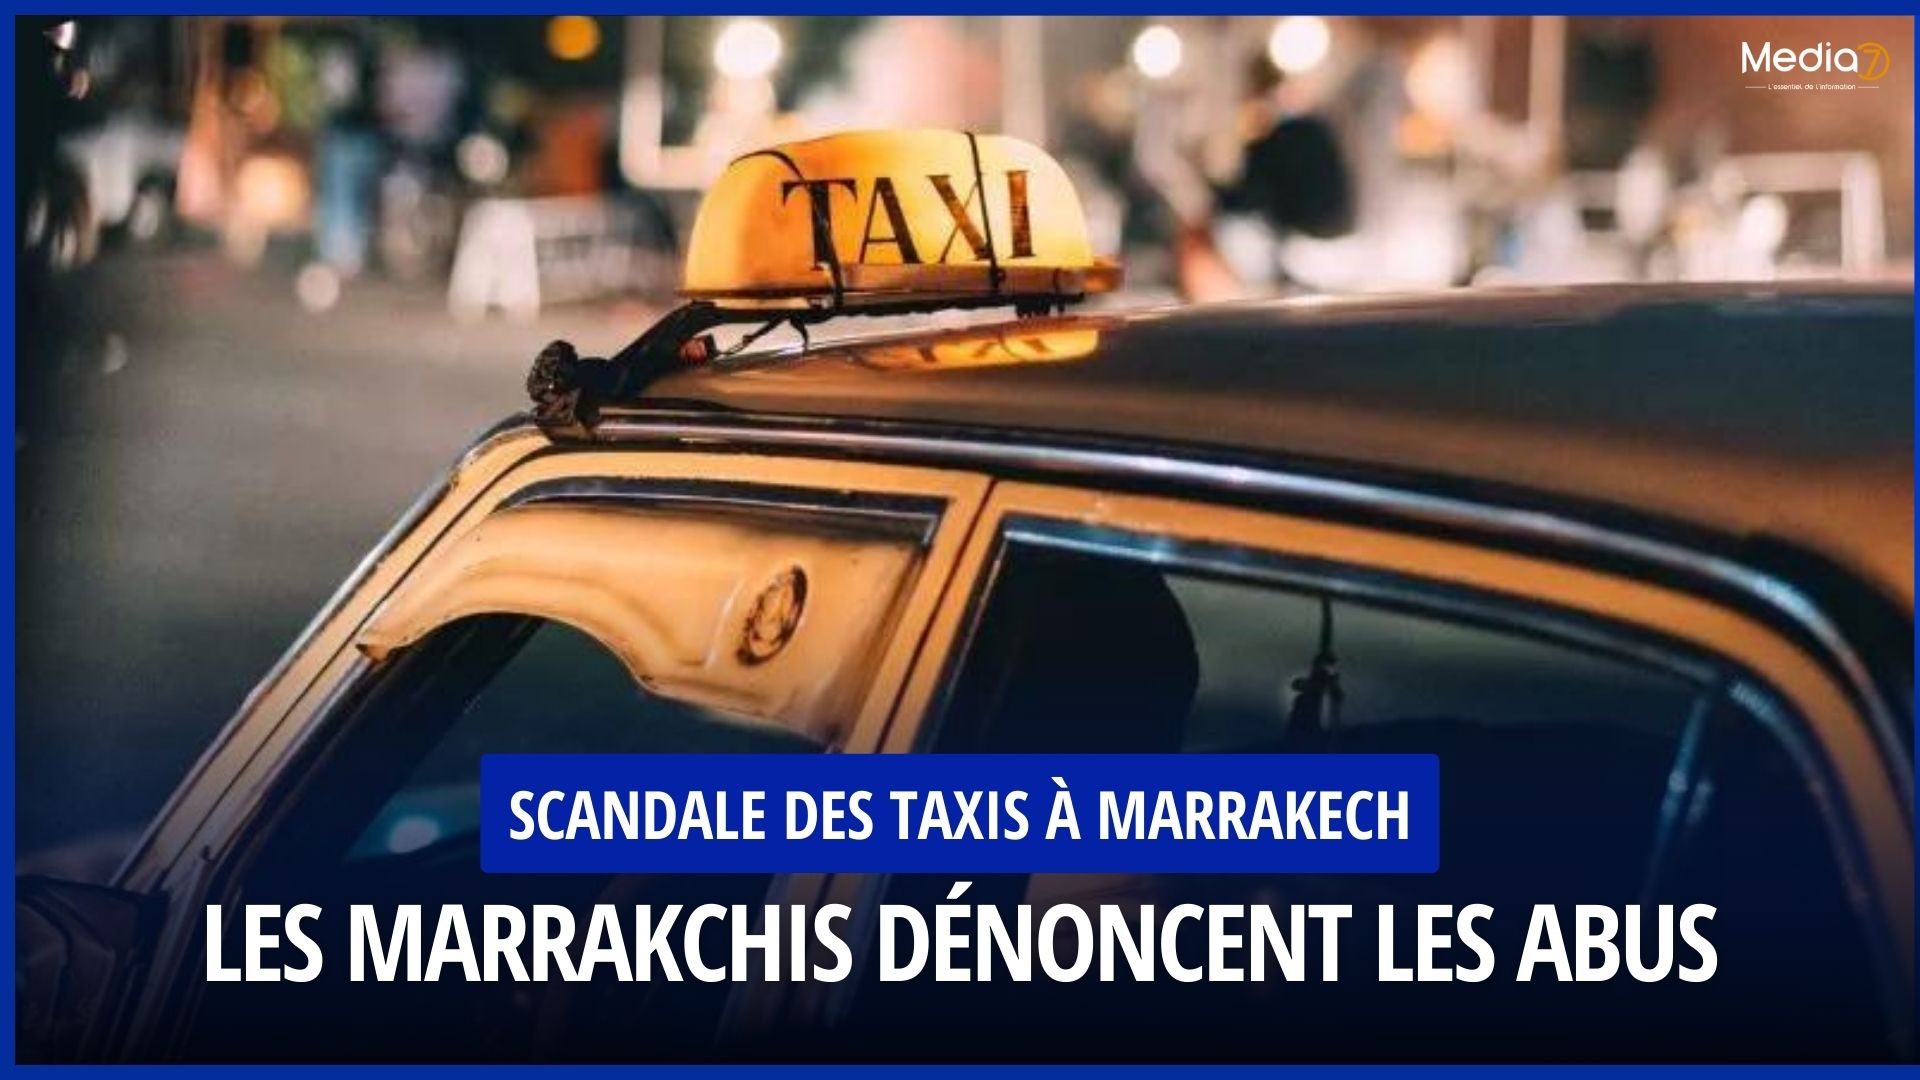 Taxi Scandal in Marrakech: Marrakchis Denounce Abuse!